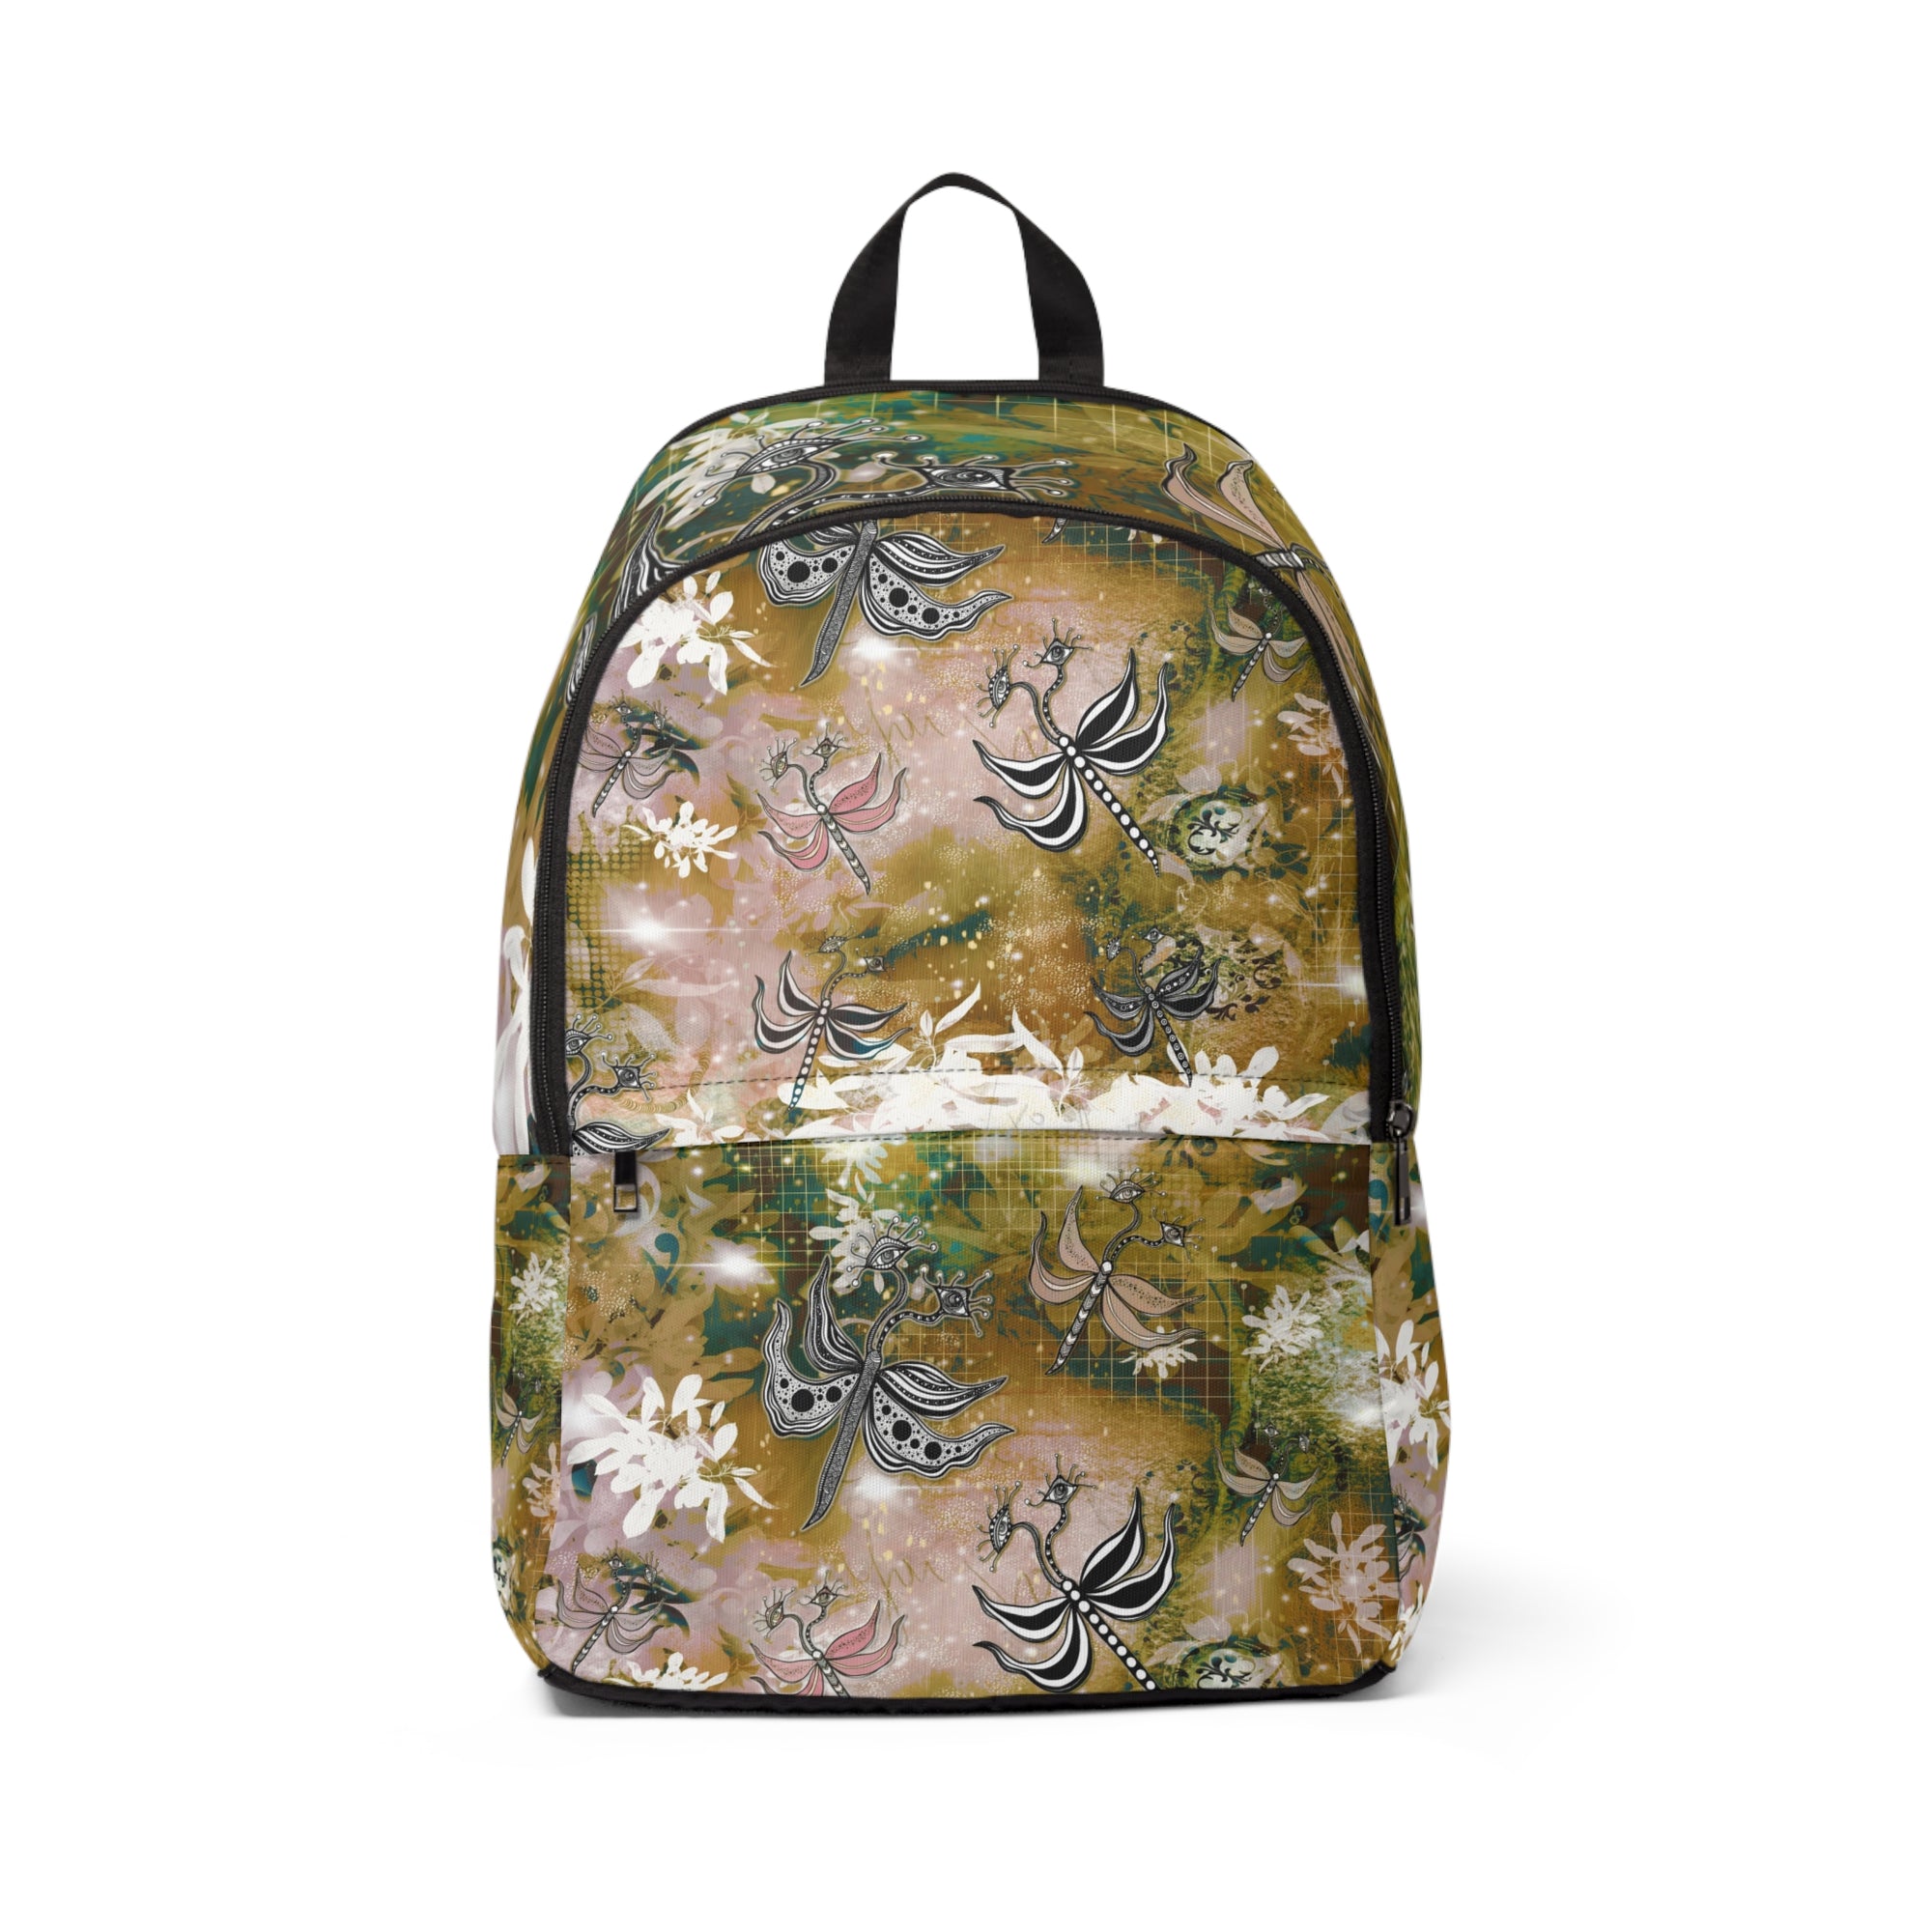 Butterfly Garden Backpack